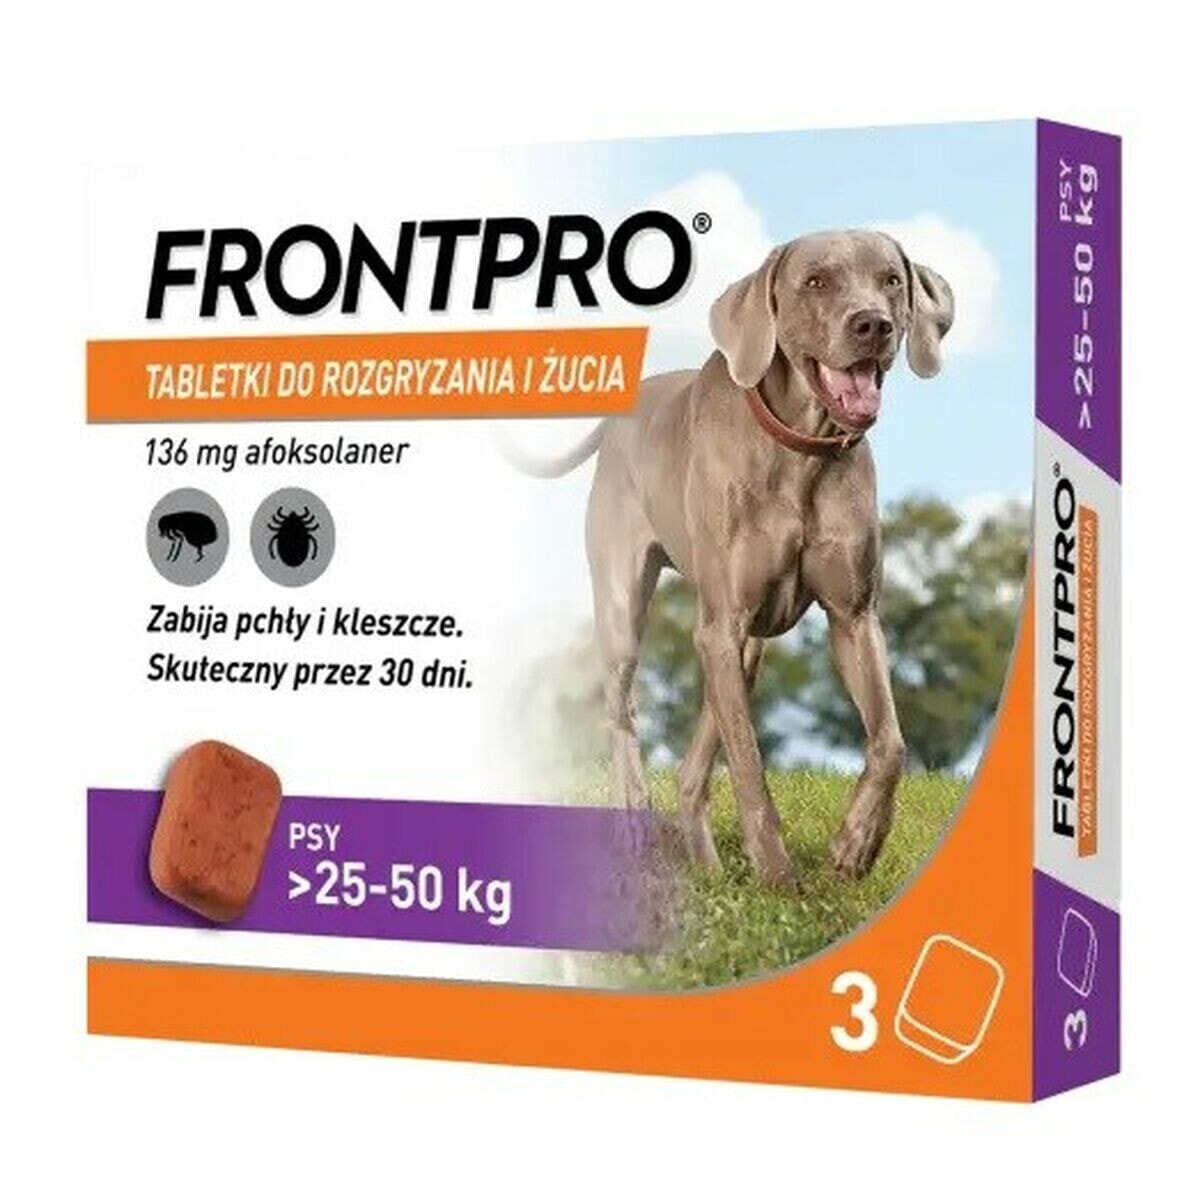 таблетки FRONTPRO 612474 15 g 3 x 136 mg Подходит для собак весом макс. >25-50 кг